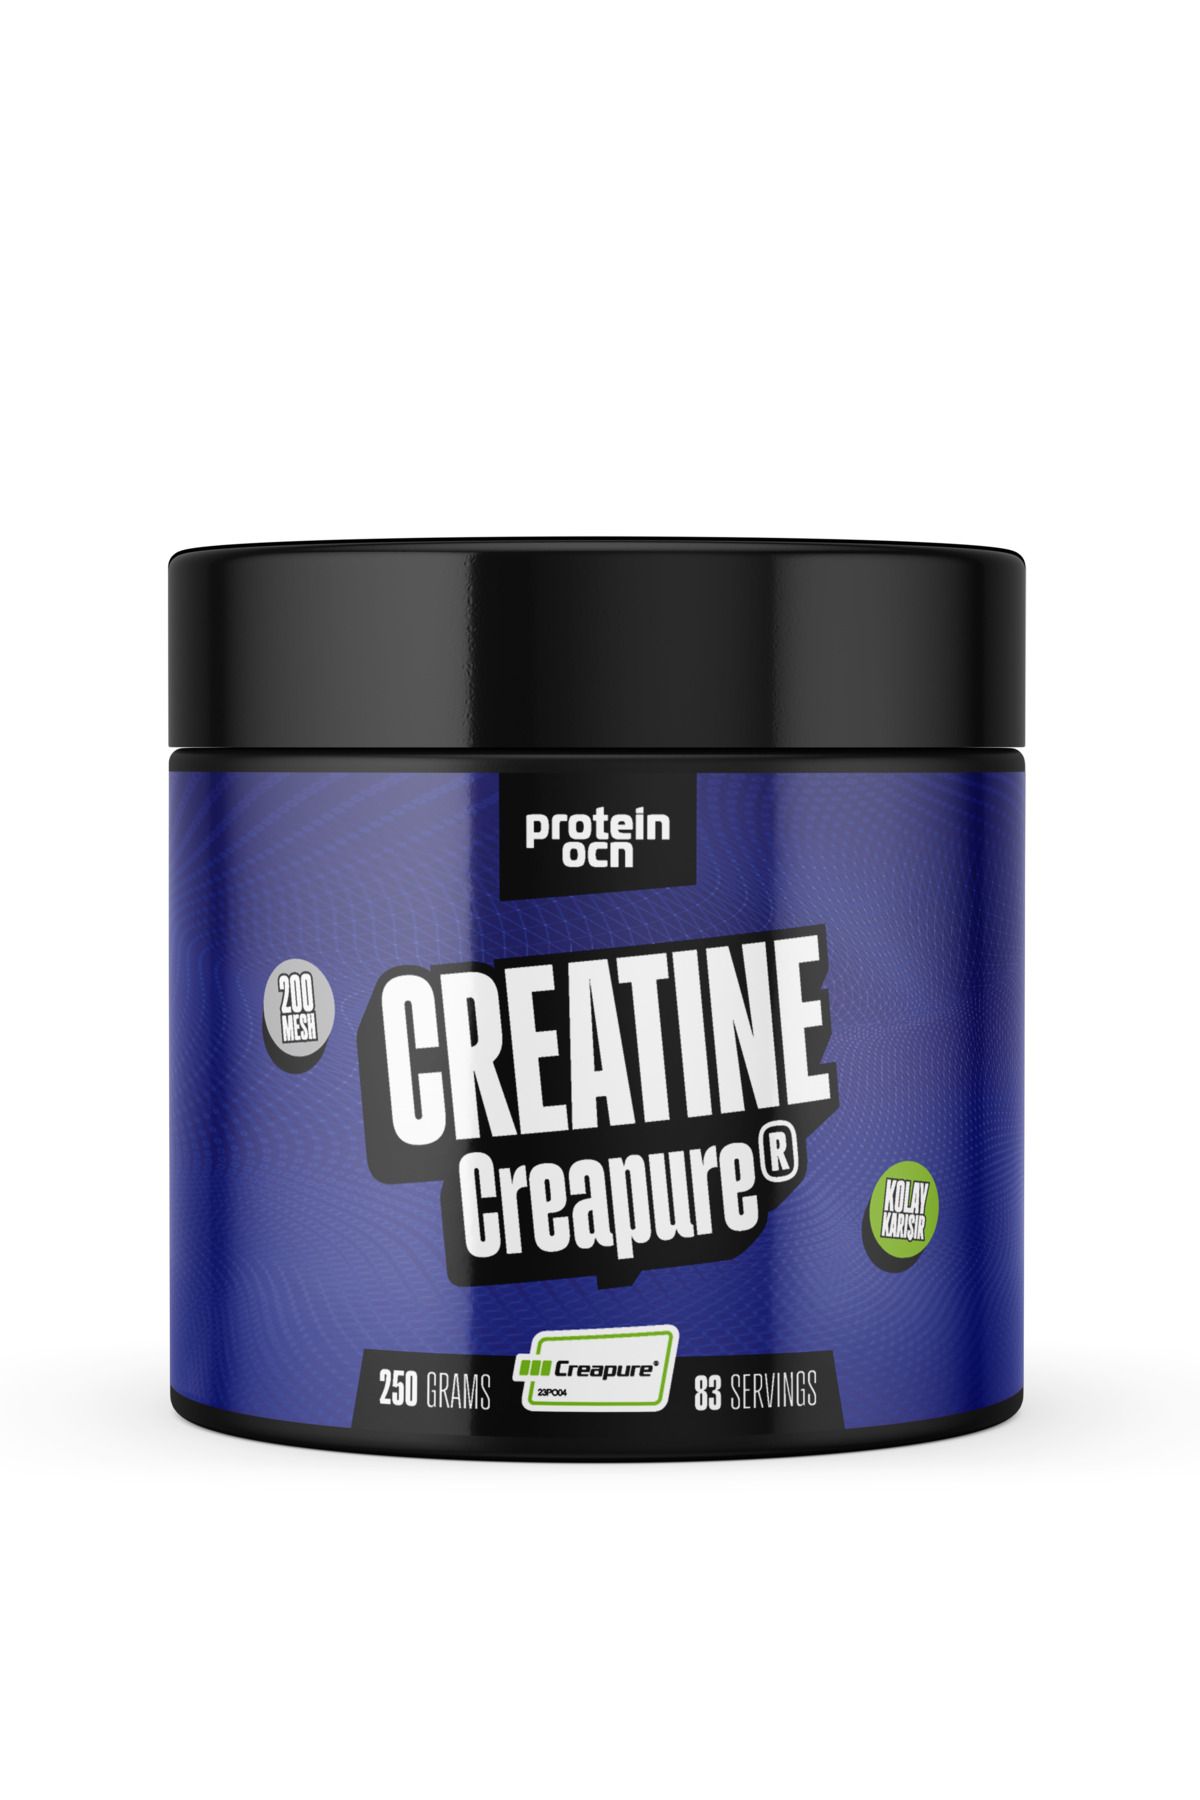 Proteinocean CREATİNE Creapure® - Aromasız - 250g - 83 servis